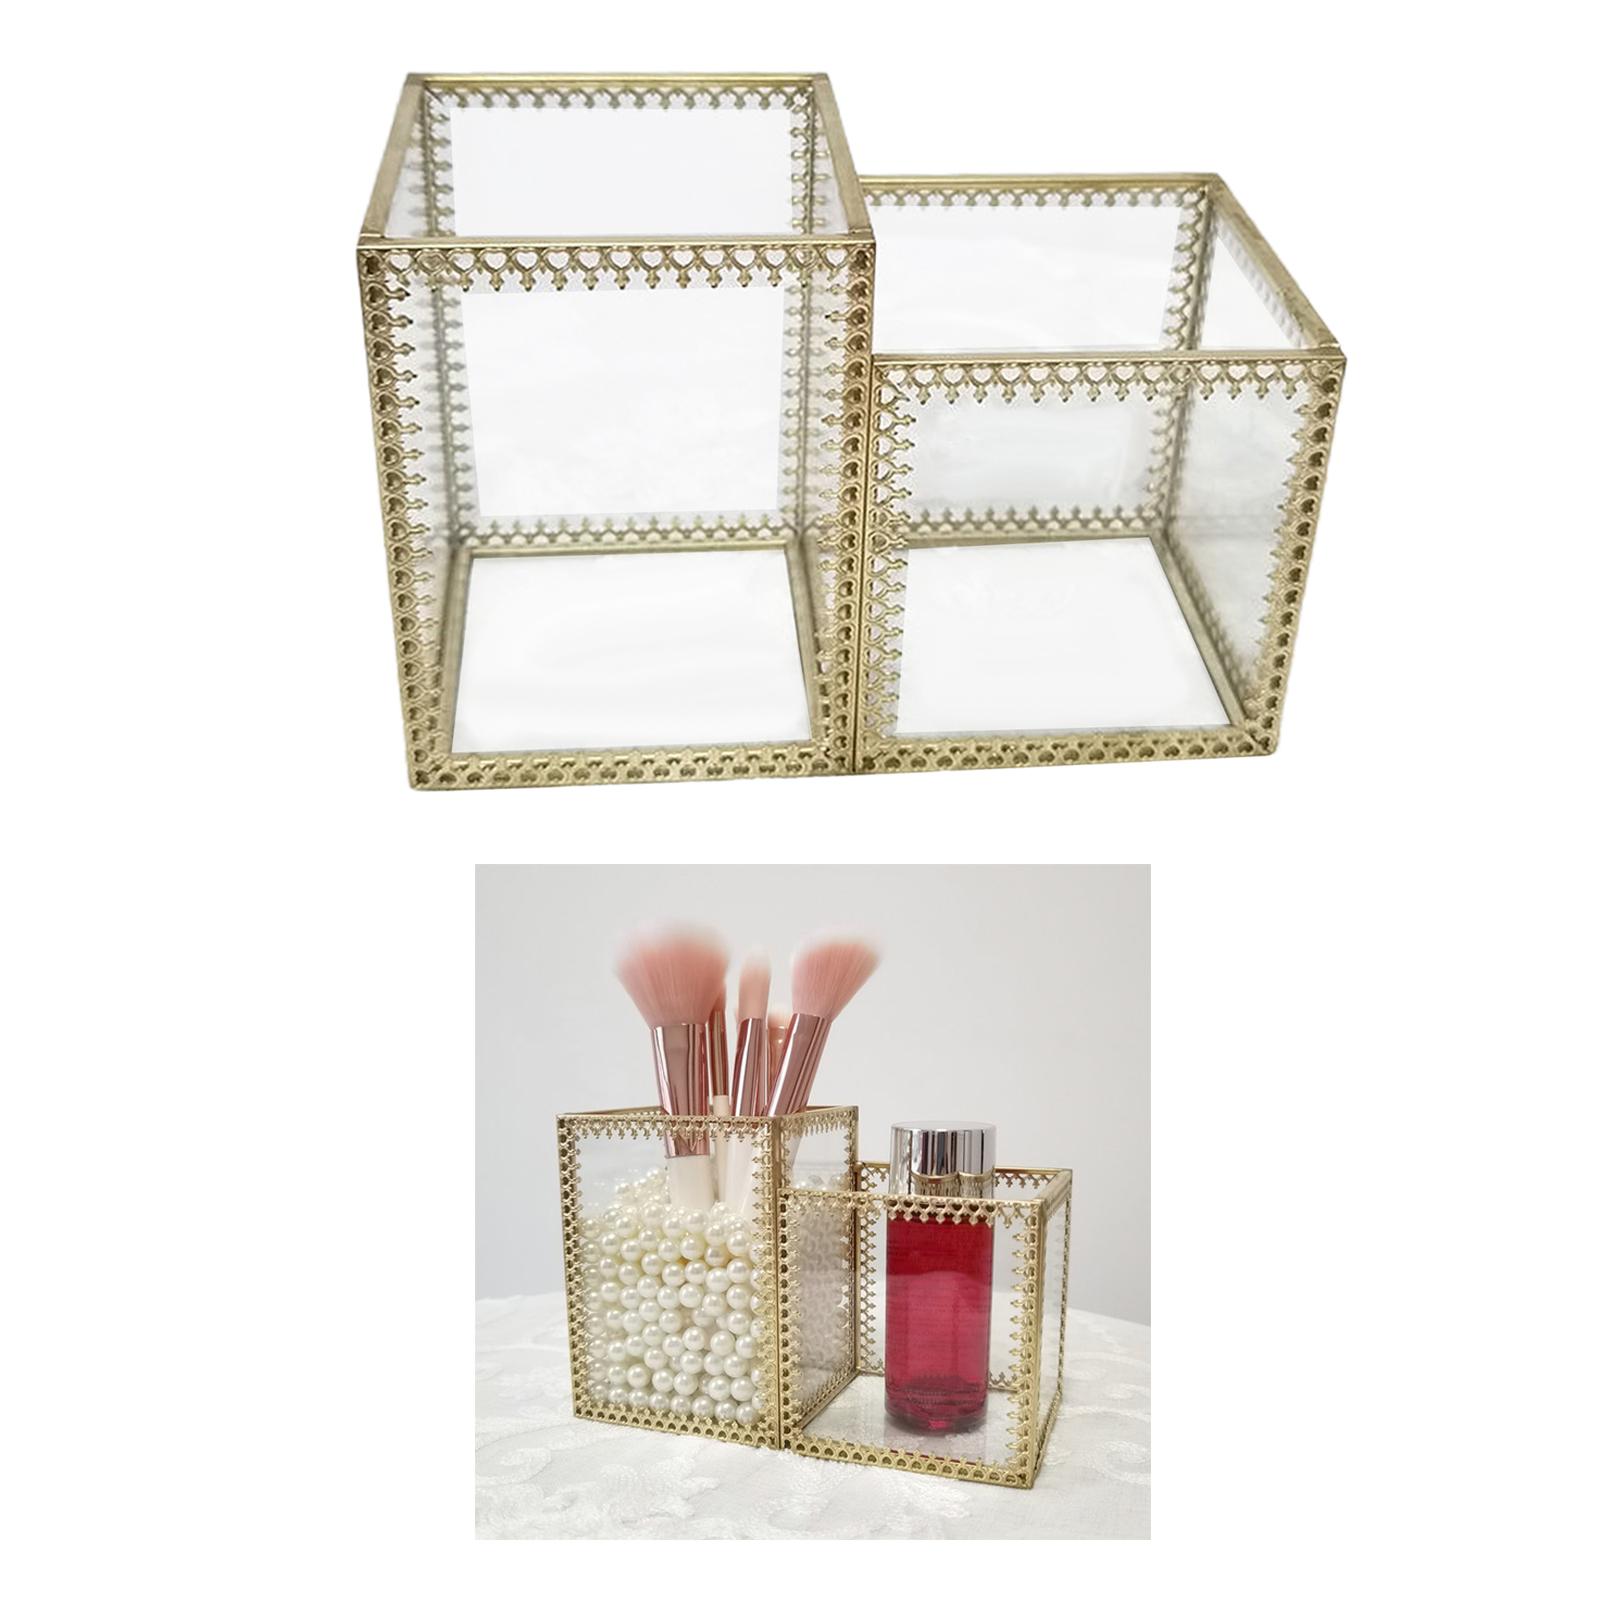 Clear Makeup Storage Box Brush Holder Grooming Cosmetics Organizer Case